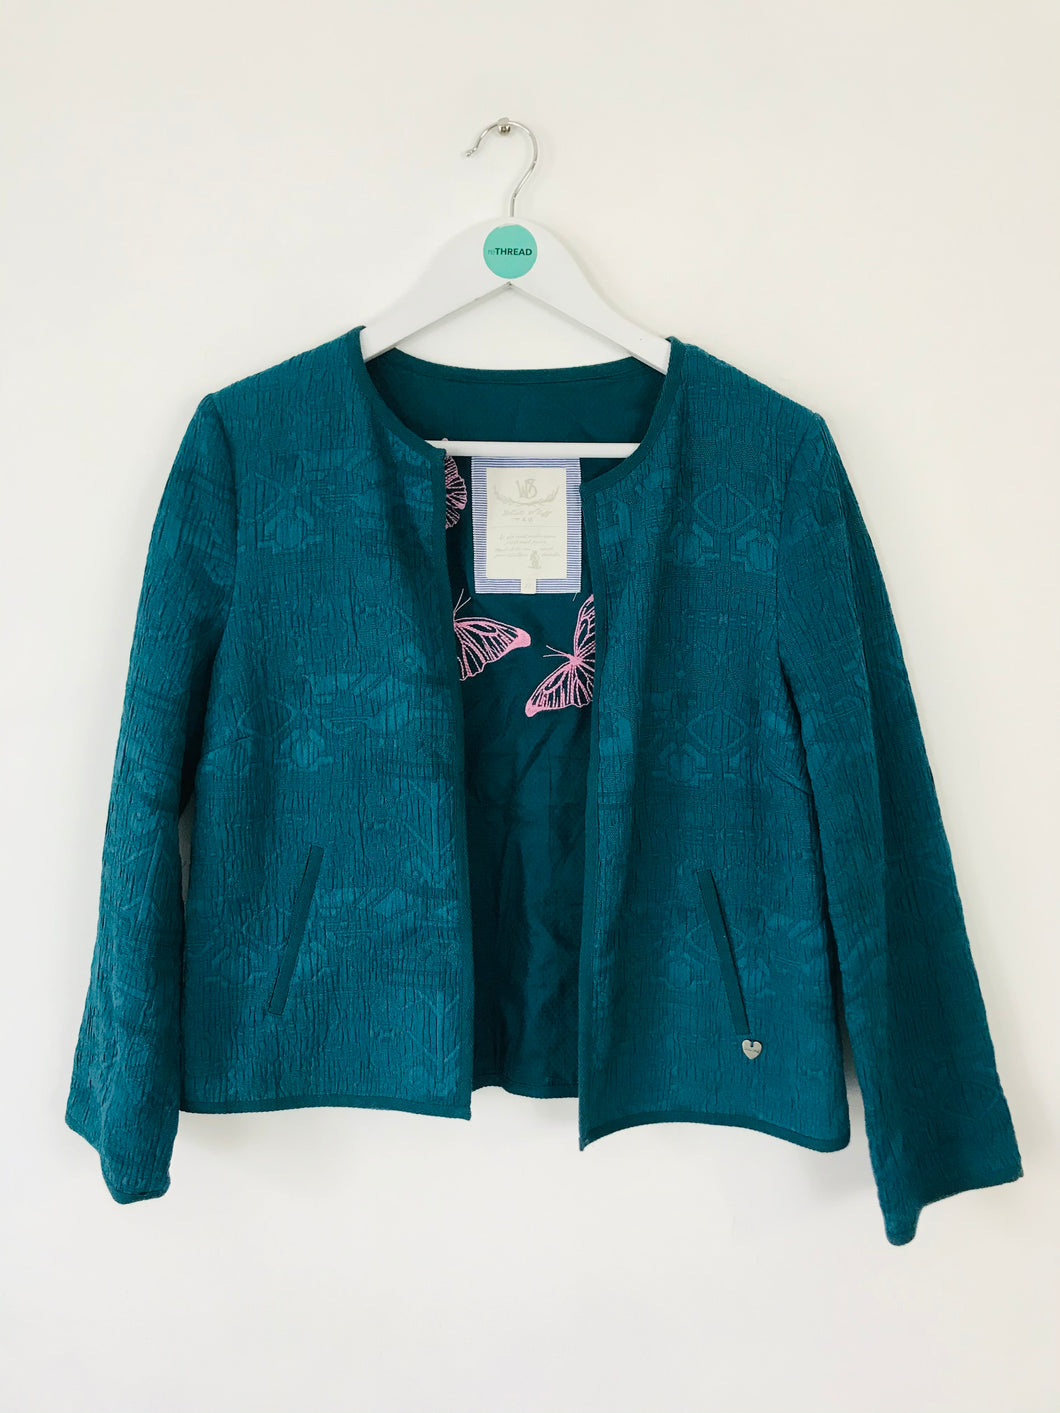 White Stuff Women’s Cropped Cardigan Blazer | UK12 | Turquoise Blue Green